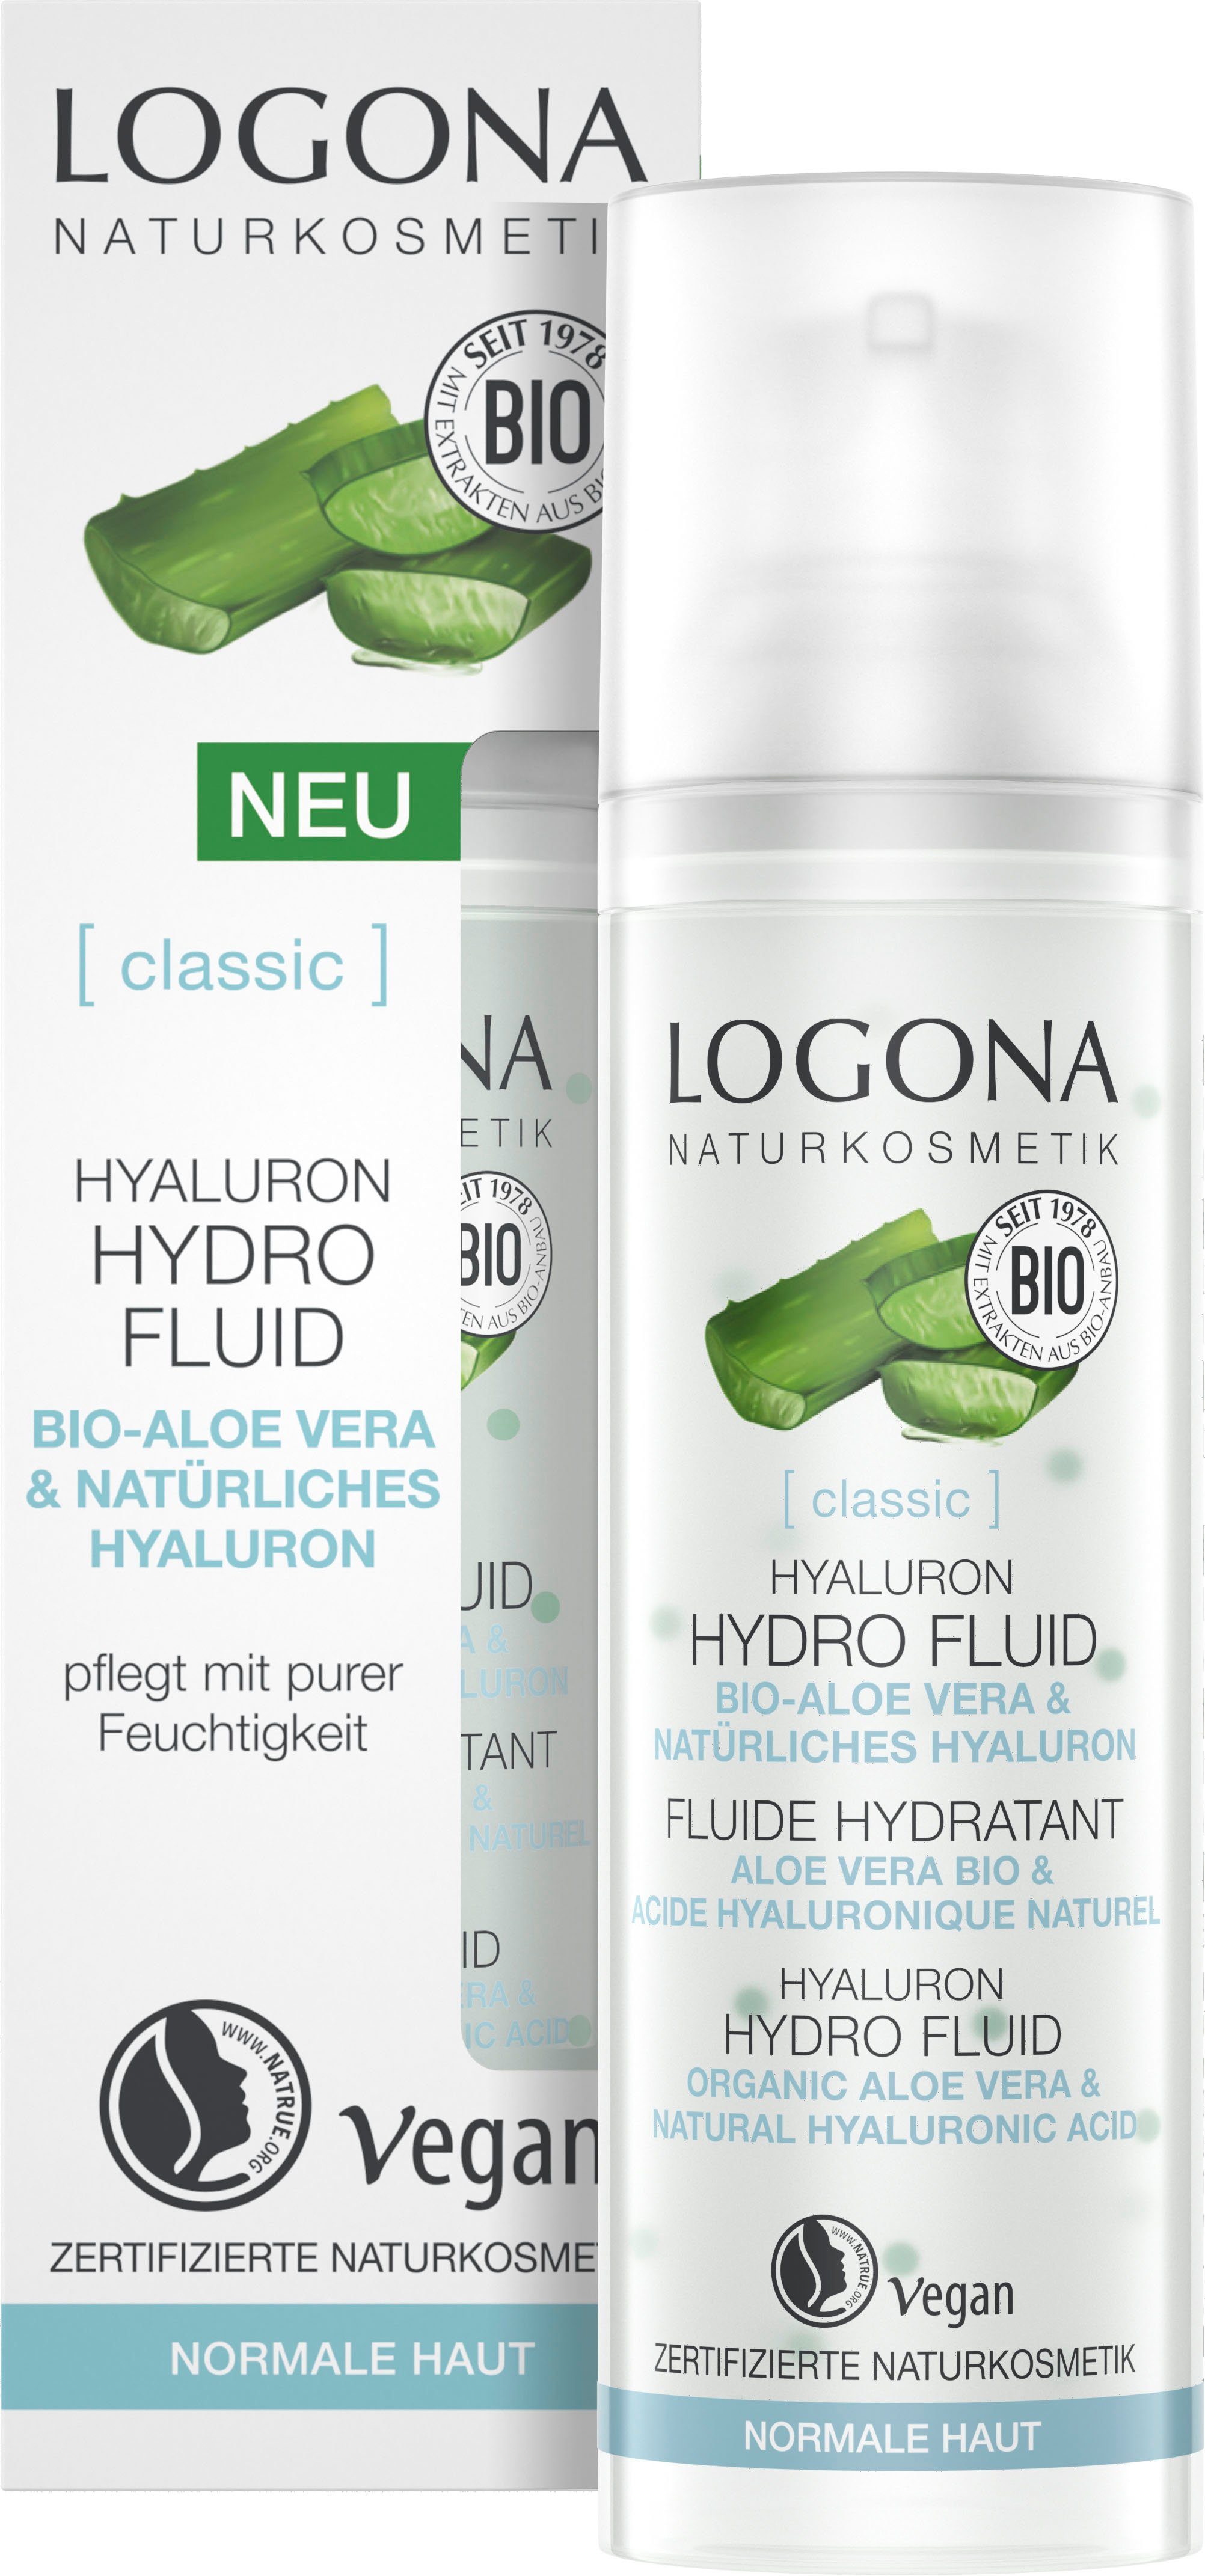 LOGONA Gesichtsfluid Hydro Hyaluron Fluid [classic] Logona